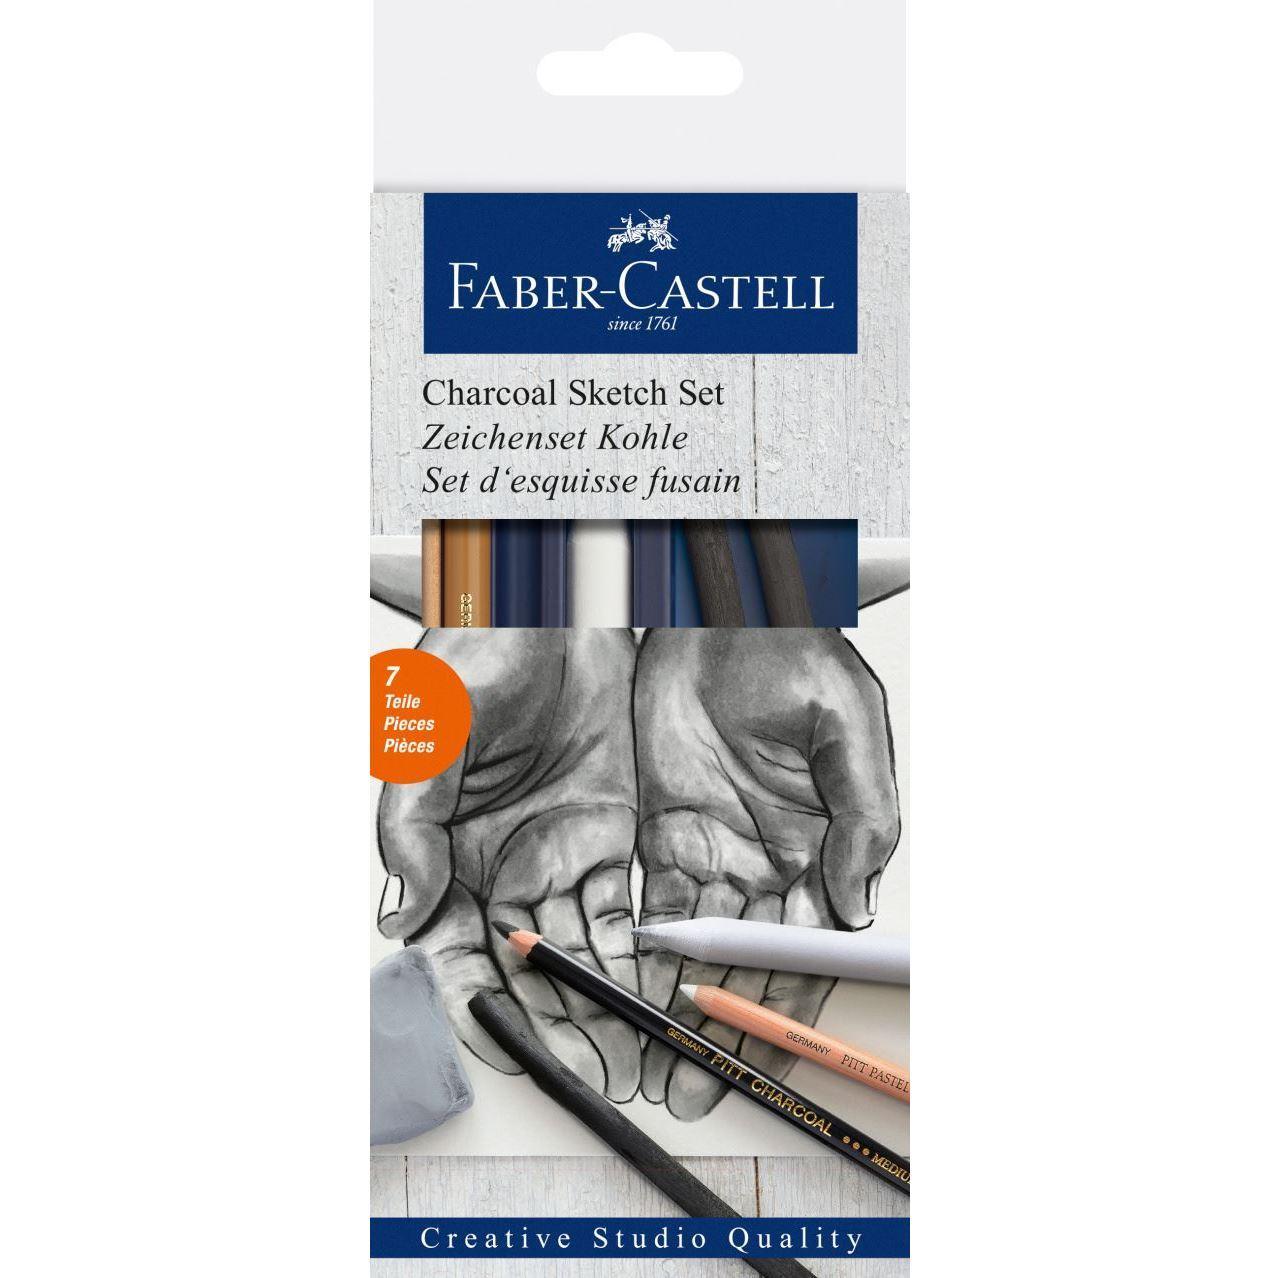 Ritset: Ritkolsset Faber-Castell Charcoal Sketch Set